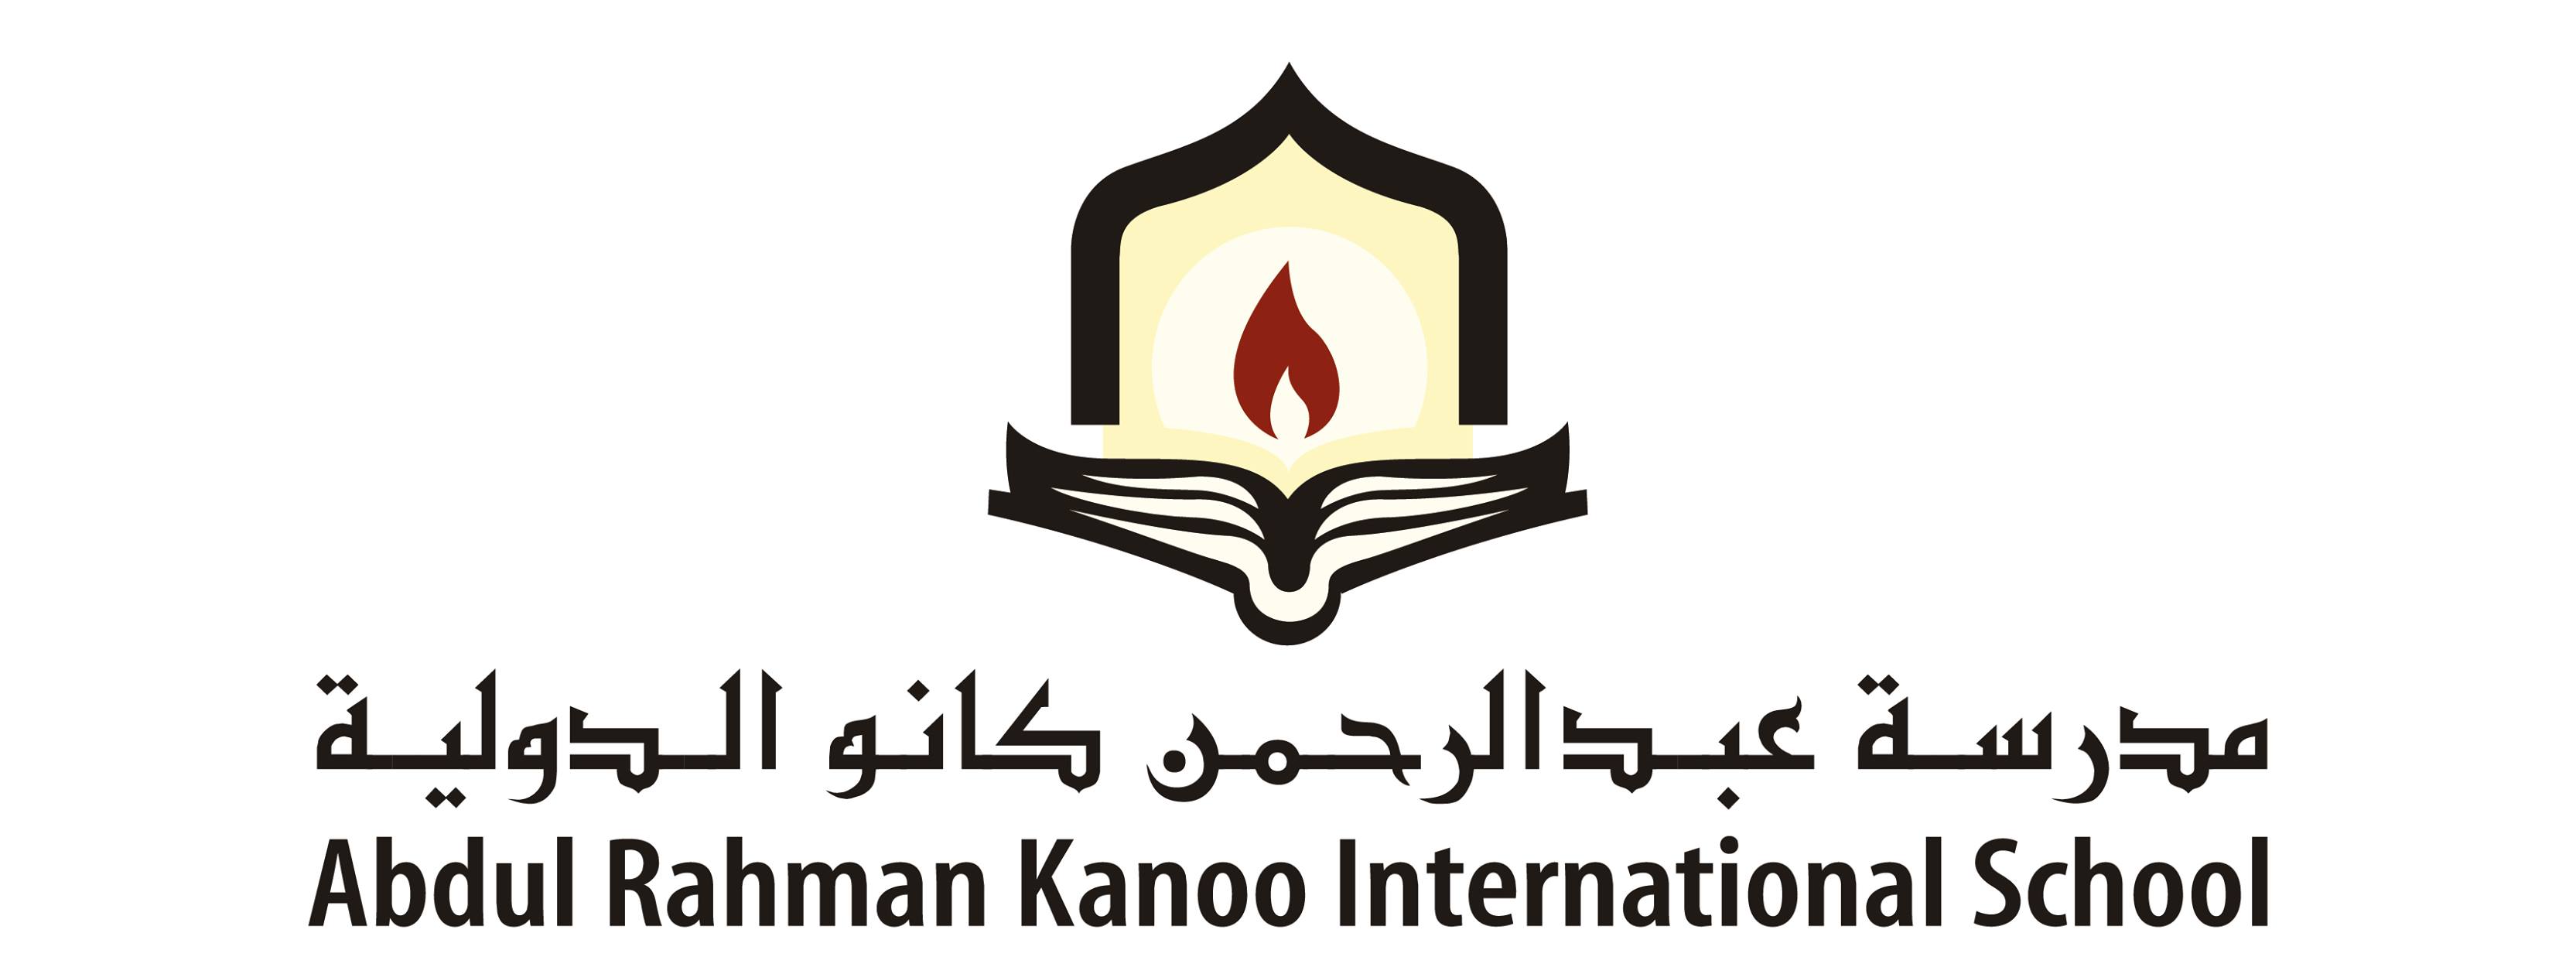 Abdul Rahman Kanoo International School (ARKIS)